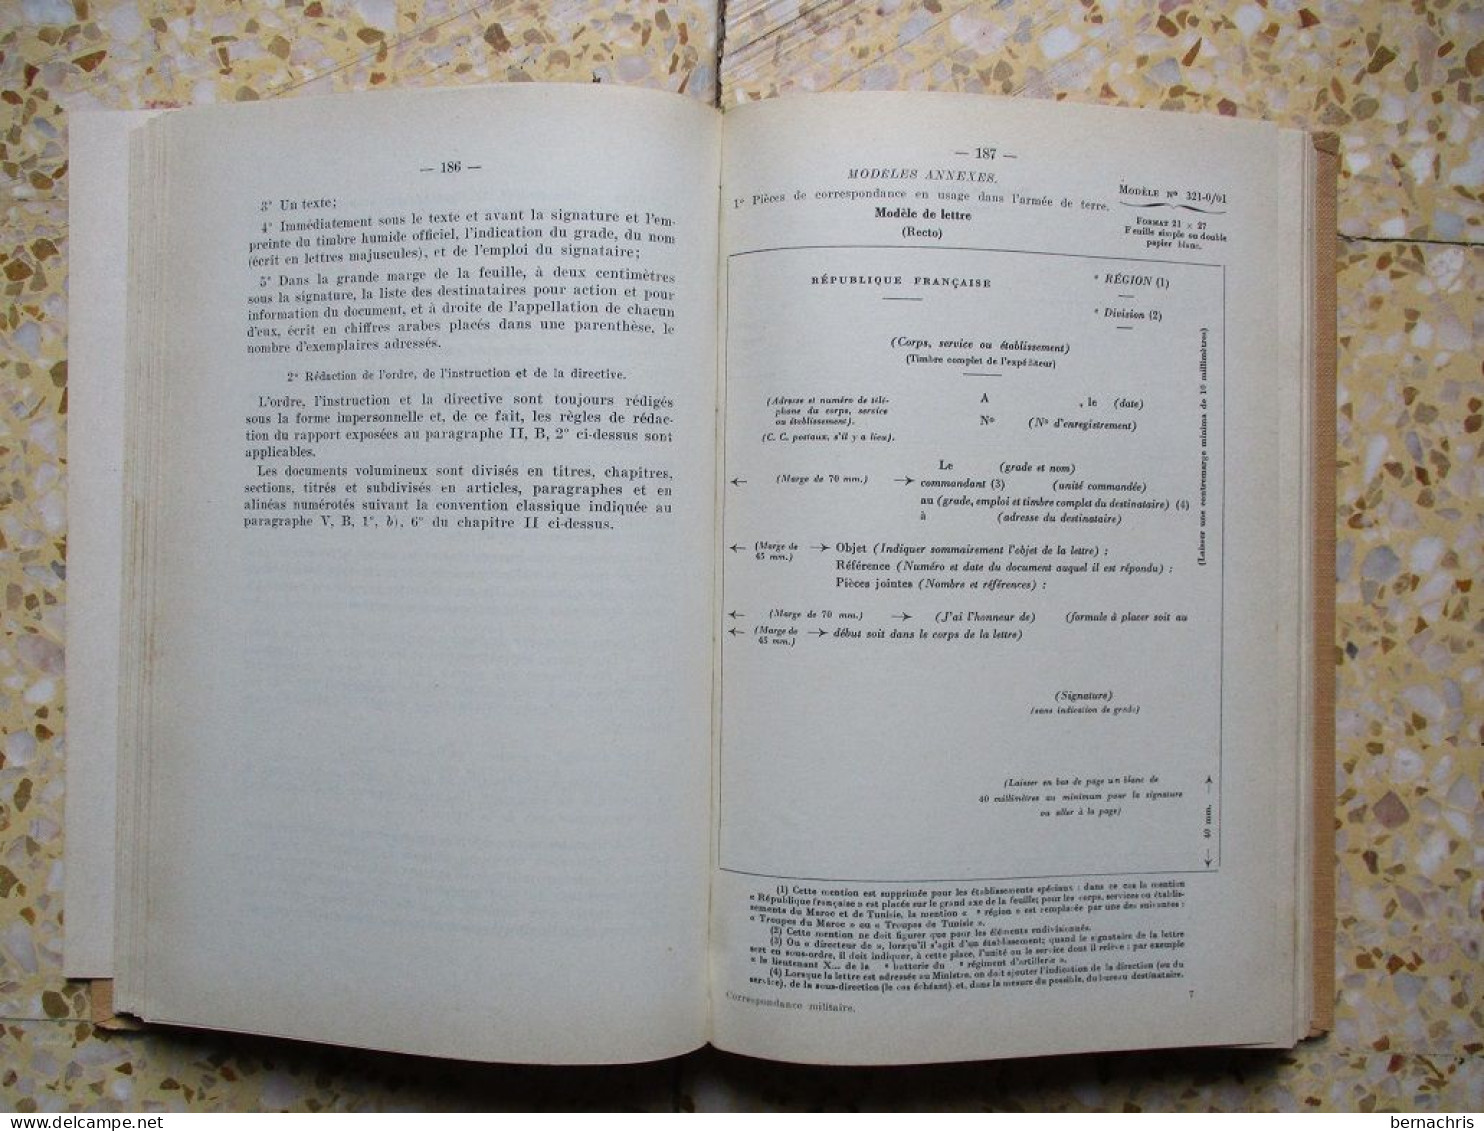 Livre Correspondance Militaire 1963 - French